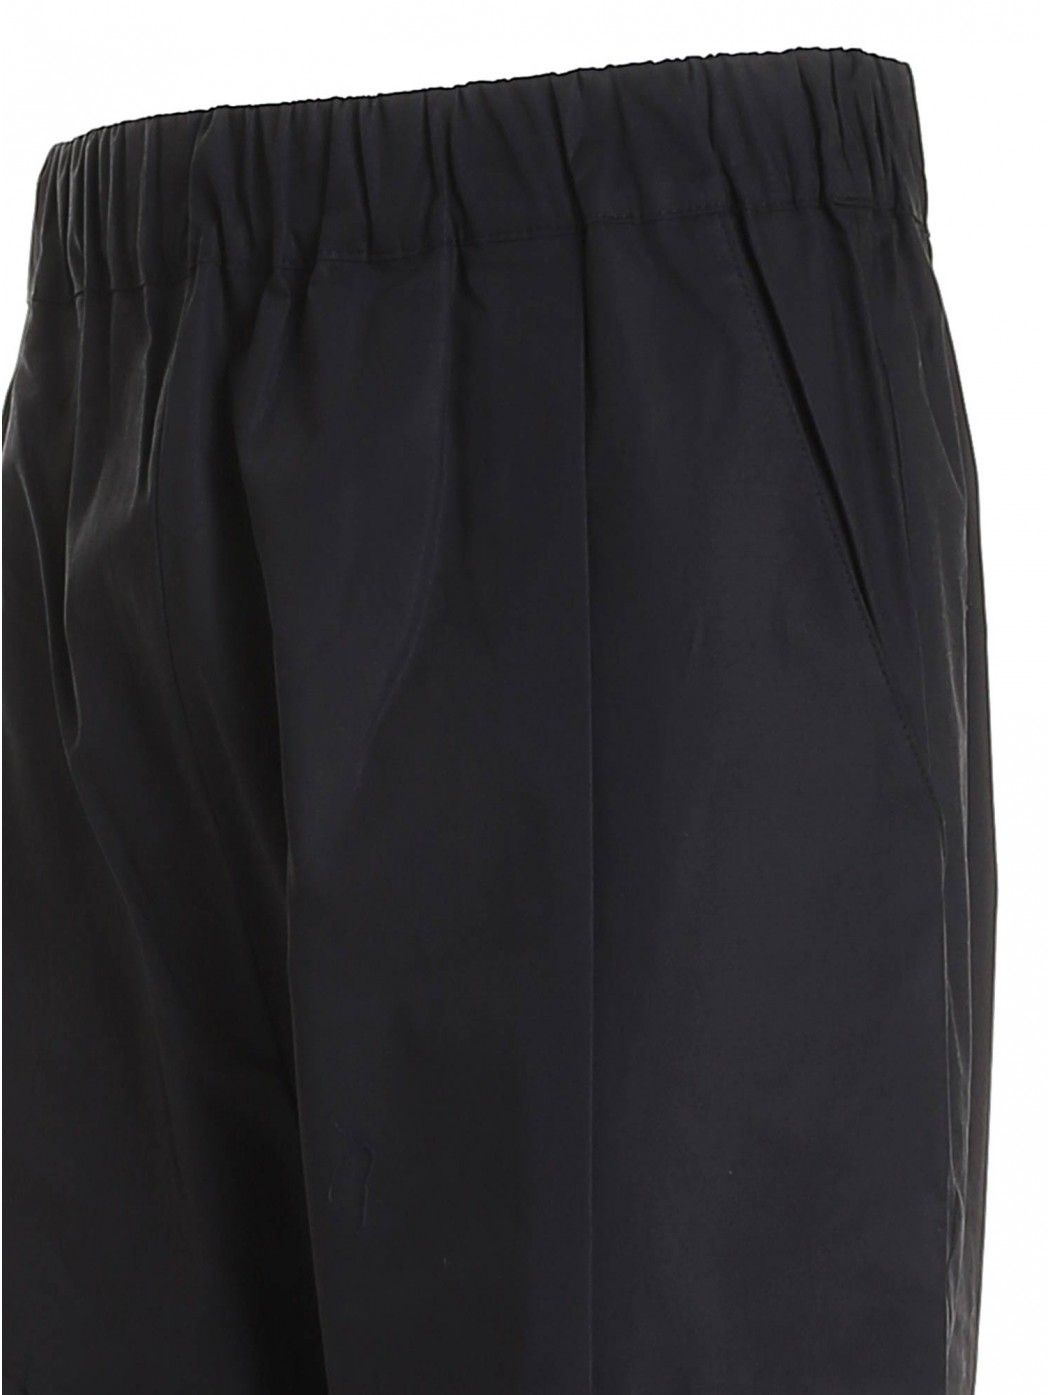 Soft stretch trousers Color: black Side slit pockets Elastic waistband  LANEUS